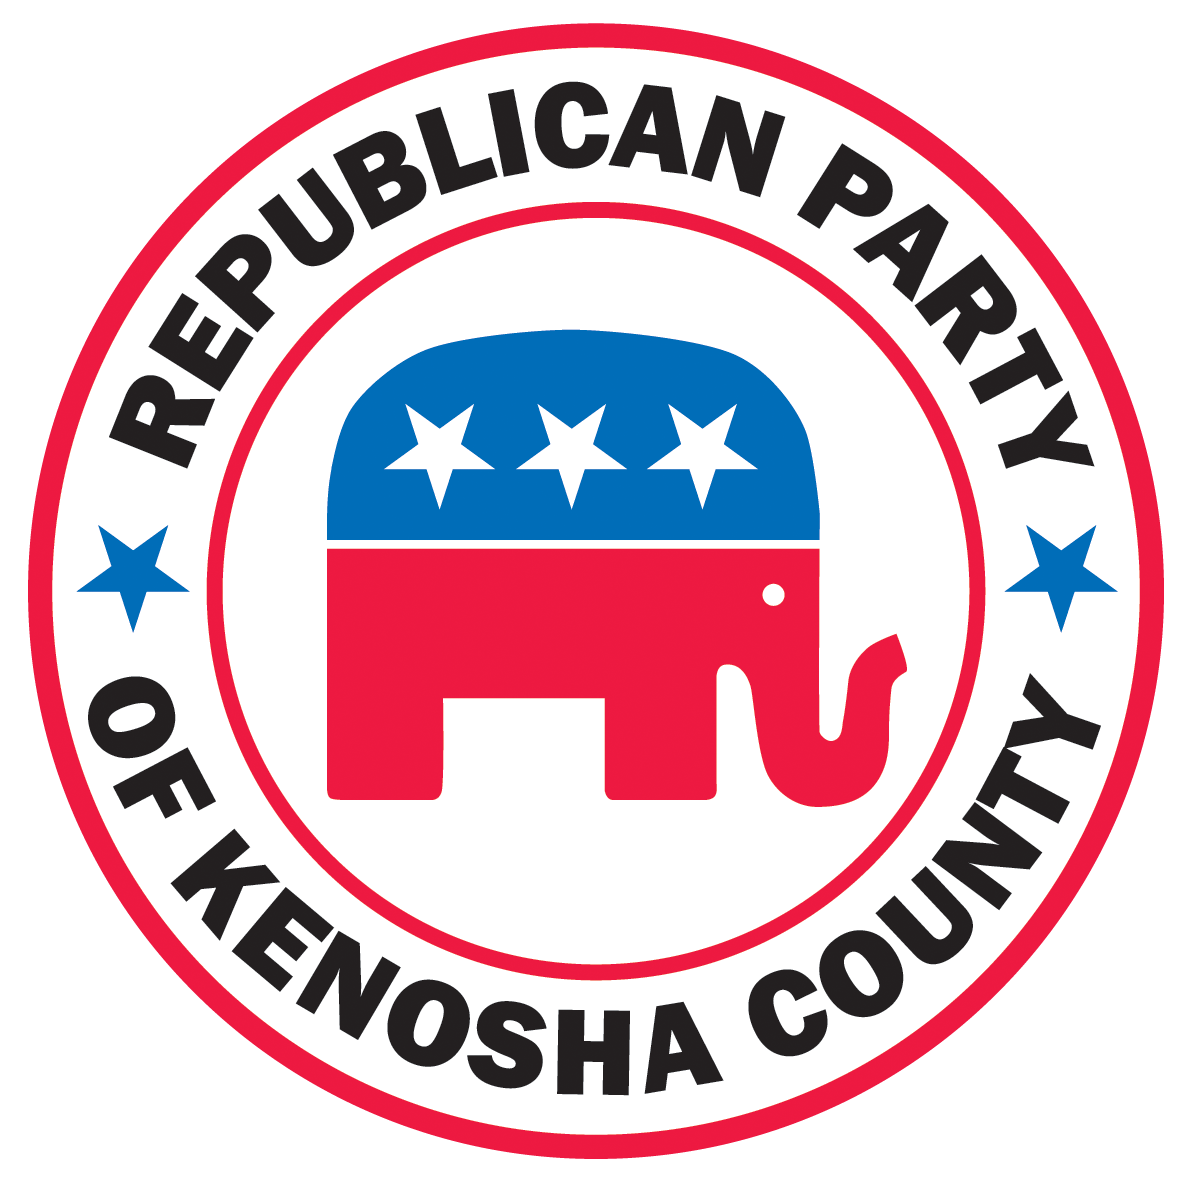 Republican Party of Kenosha County logo